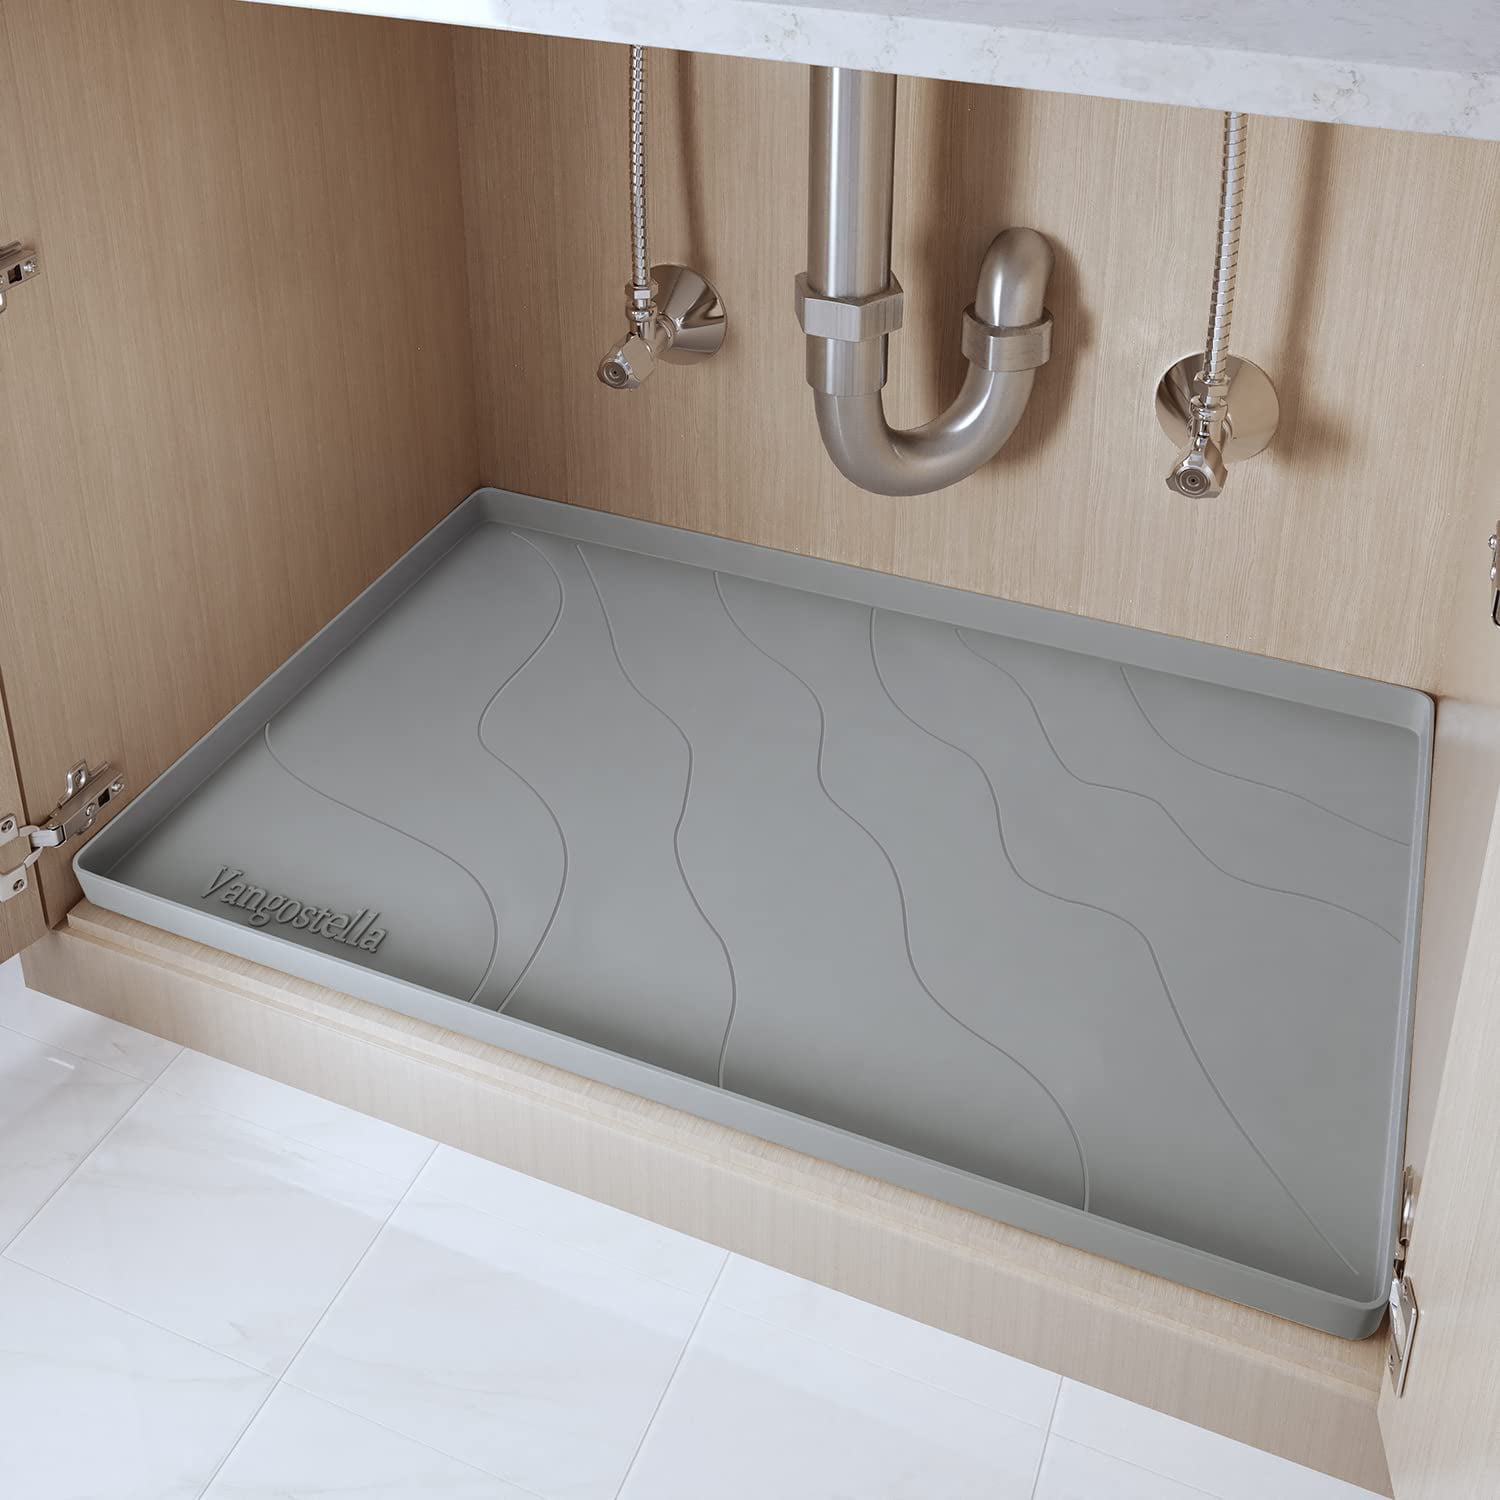 PELTEFLU Under Sink Mat, 28 x 22 Waterproof Under Sink Mats for Kitchen Bathroom, Flexible Silicone Rubber Under Sink Liner with Drain Hole, Thick